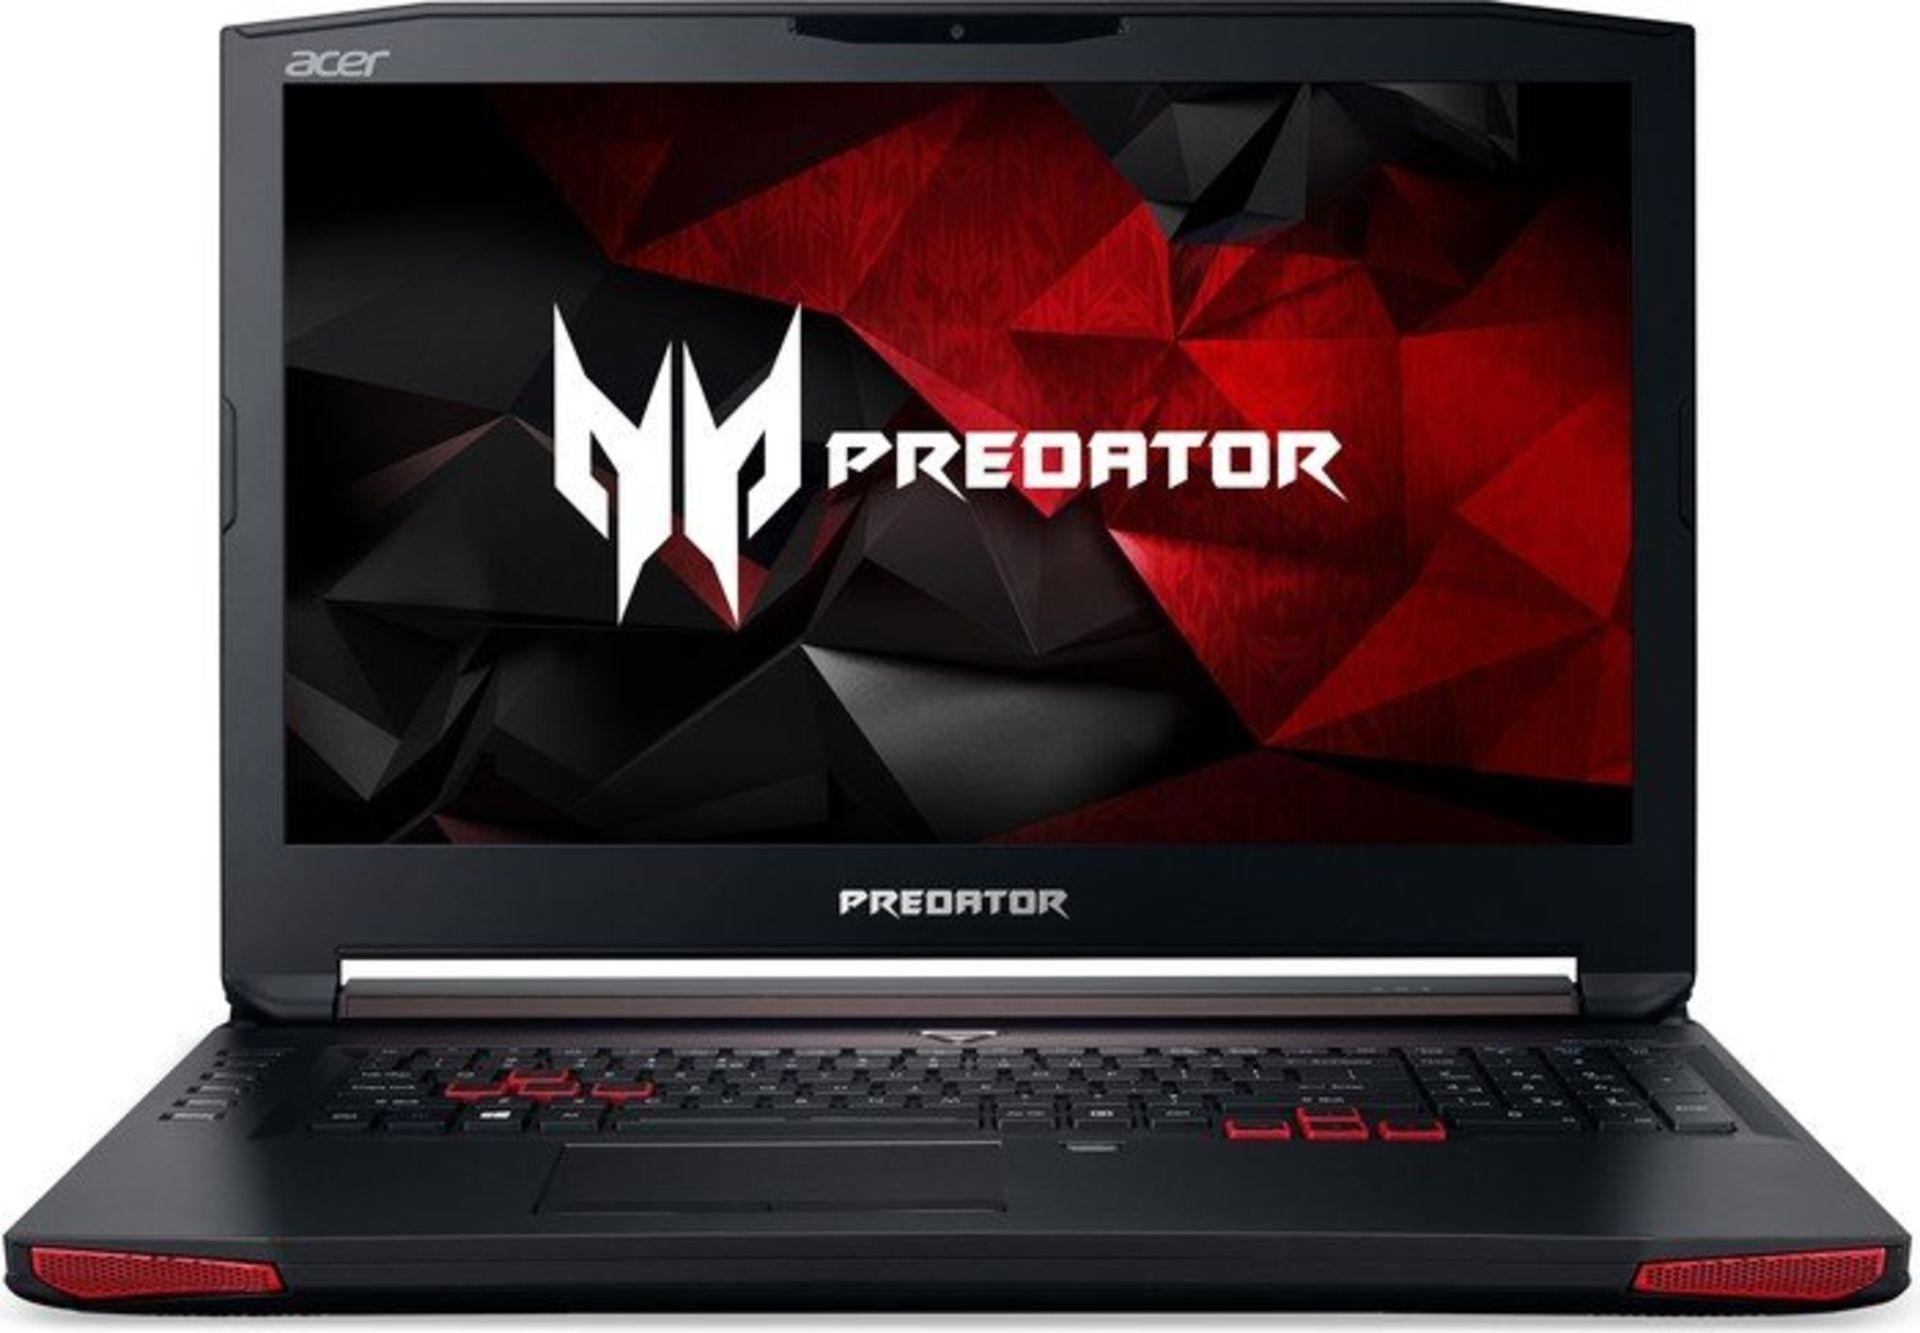 1 x Acer Predator 17 Gaming Laptop - Intel i7 Processor, 16gb DDR4, GTX1060 Graphics, SSD, 17.3" FHD